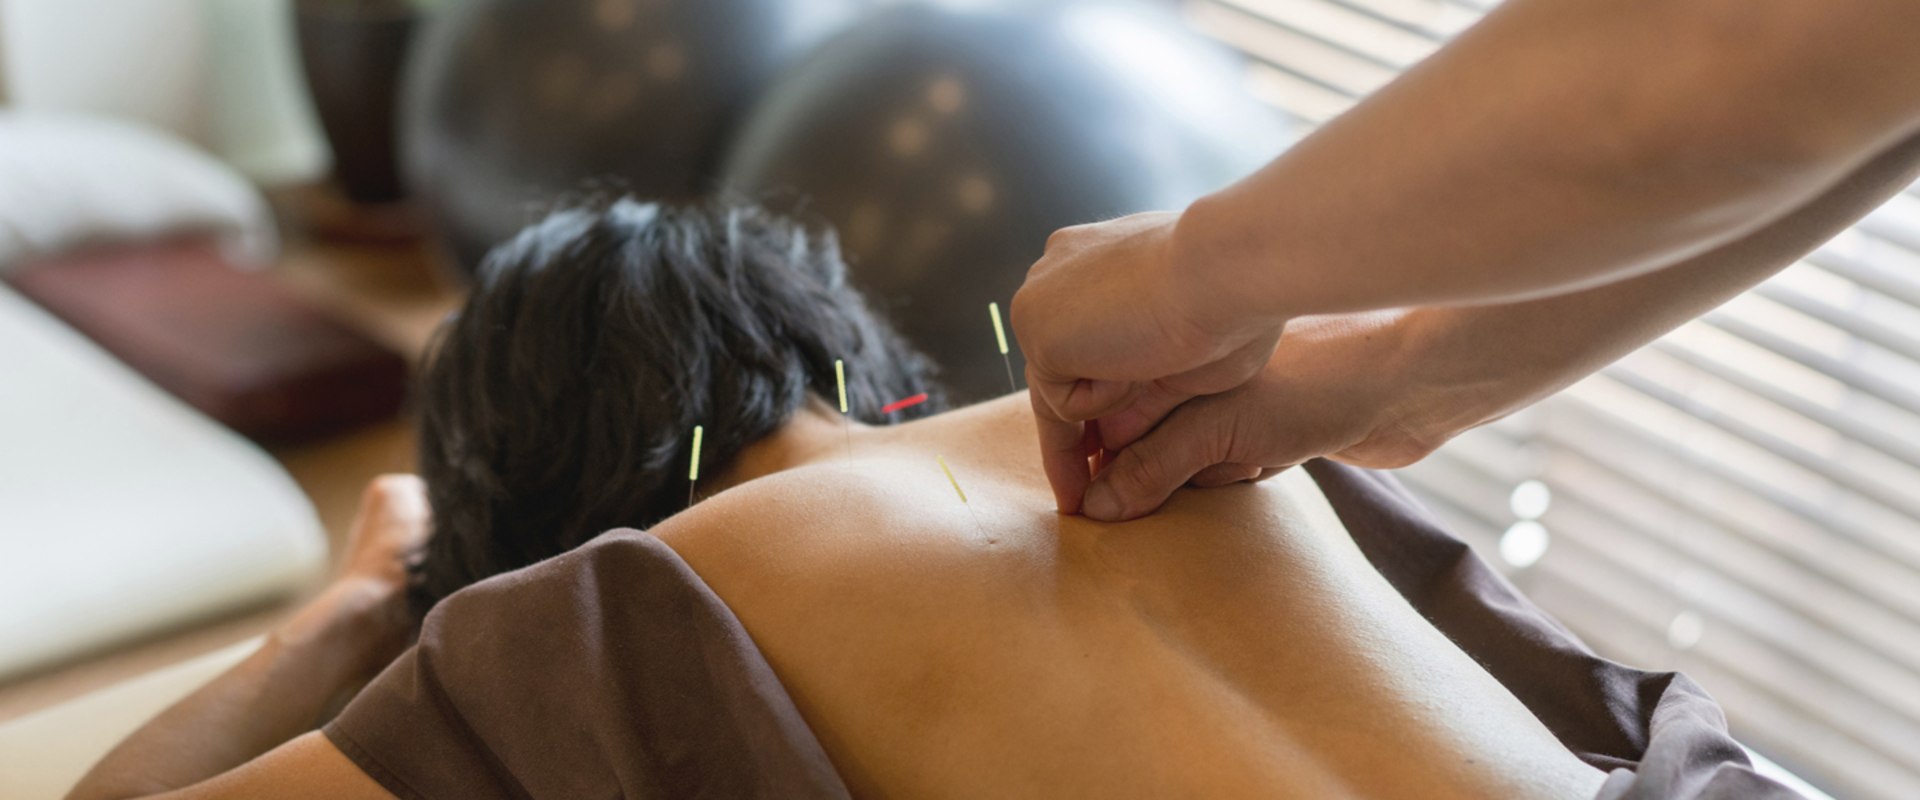 Should you get a massage if you have bursitis?